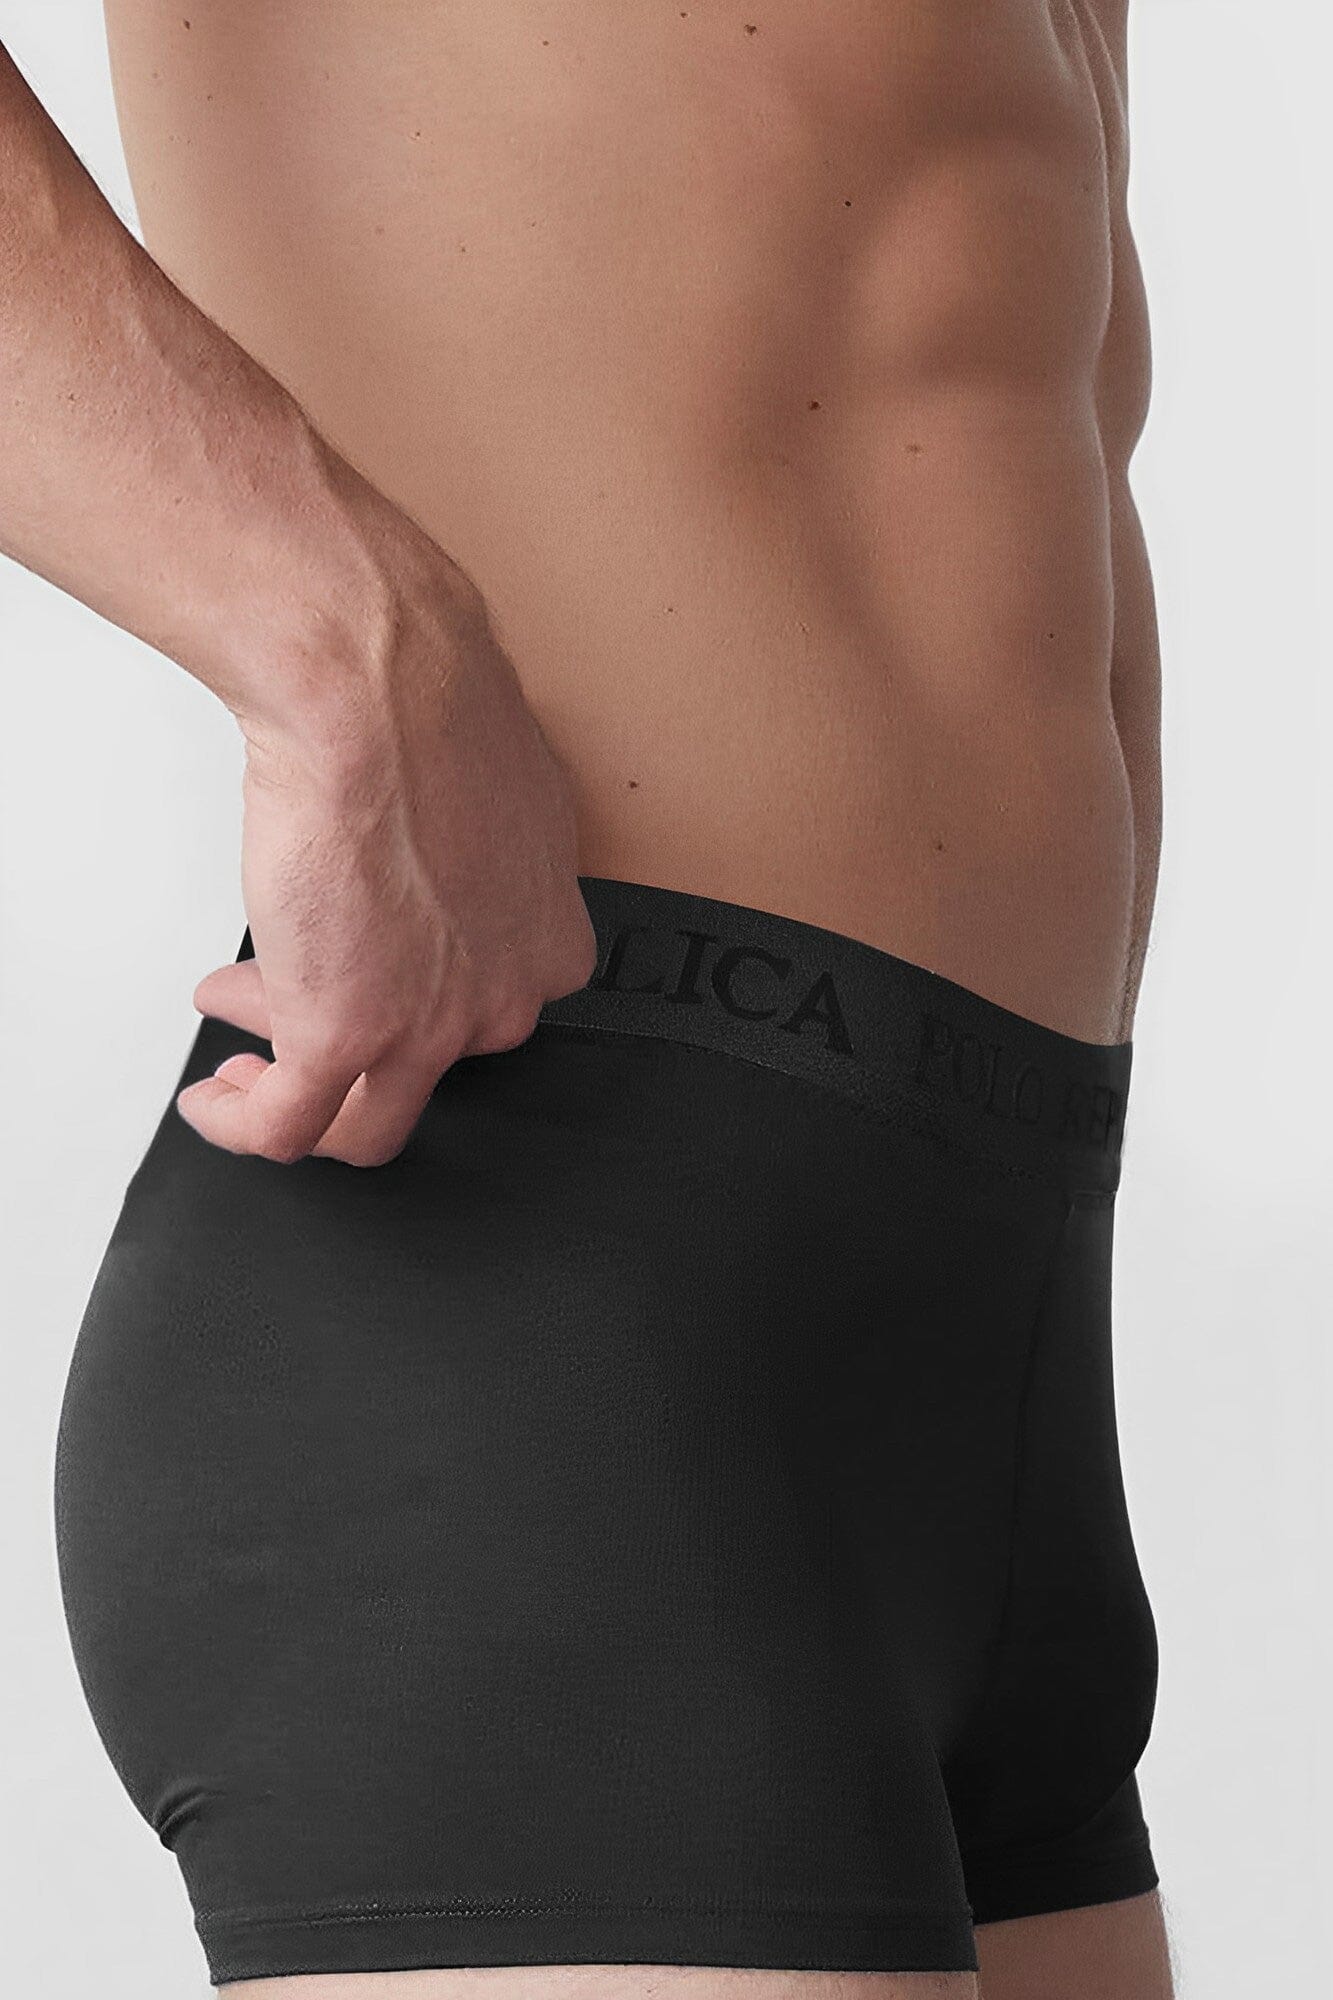 Polo Republica AirFlex Men's Breathable & Supportive 18-Hour Performance Boxer Shorts Men's Underwear Polo Republica Black S 